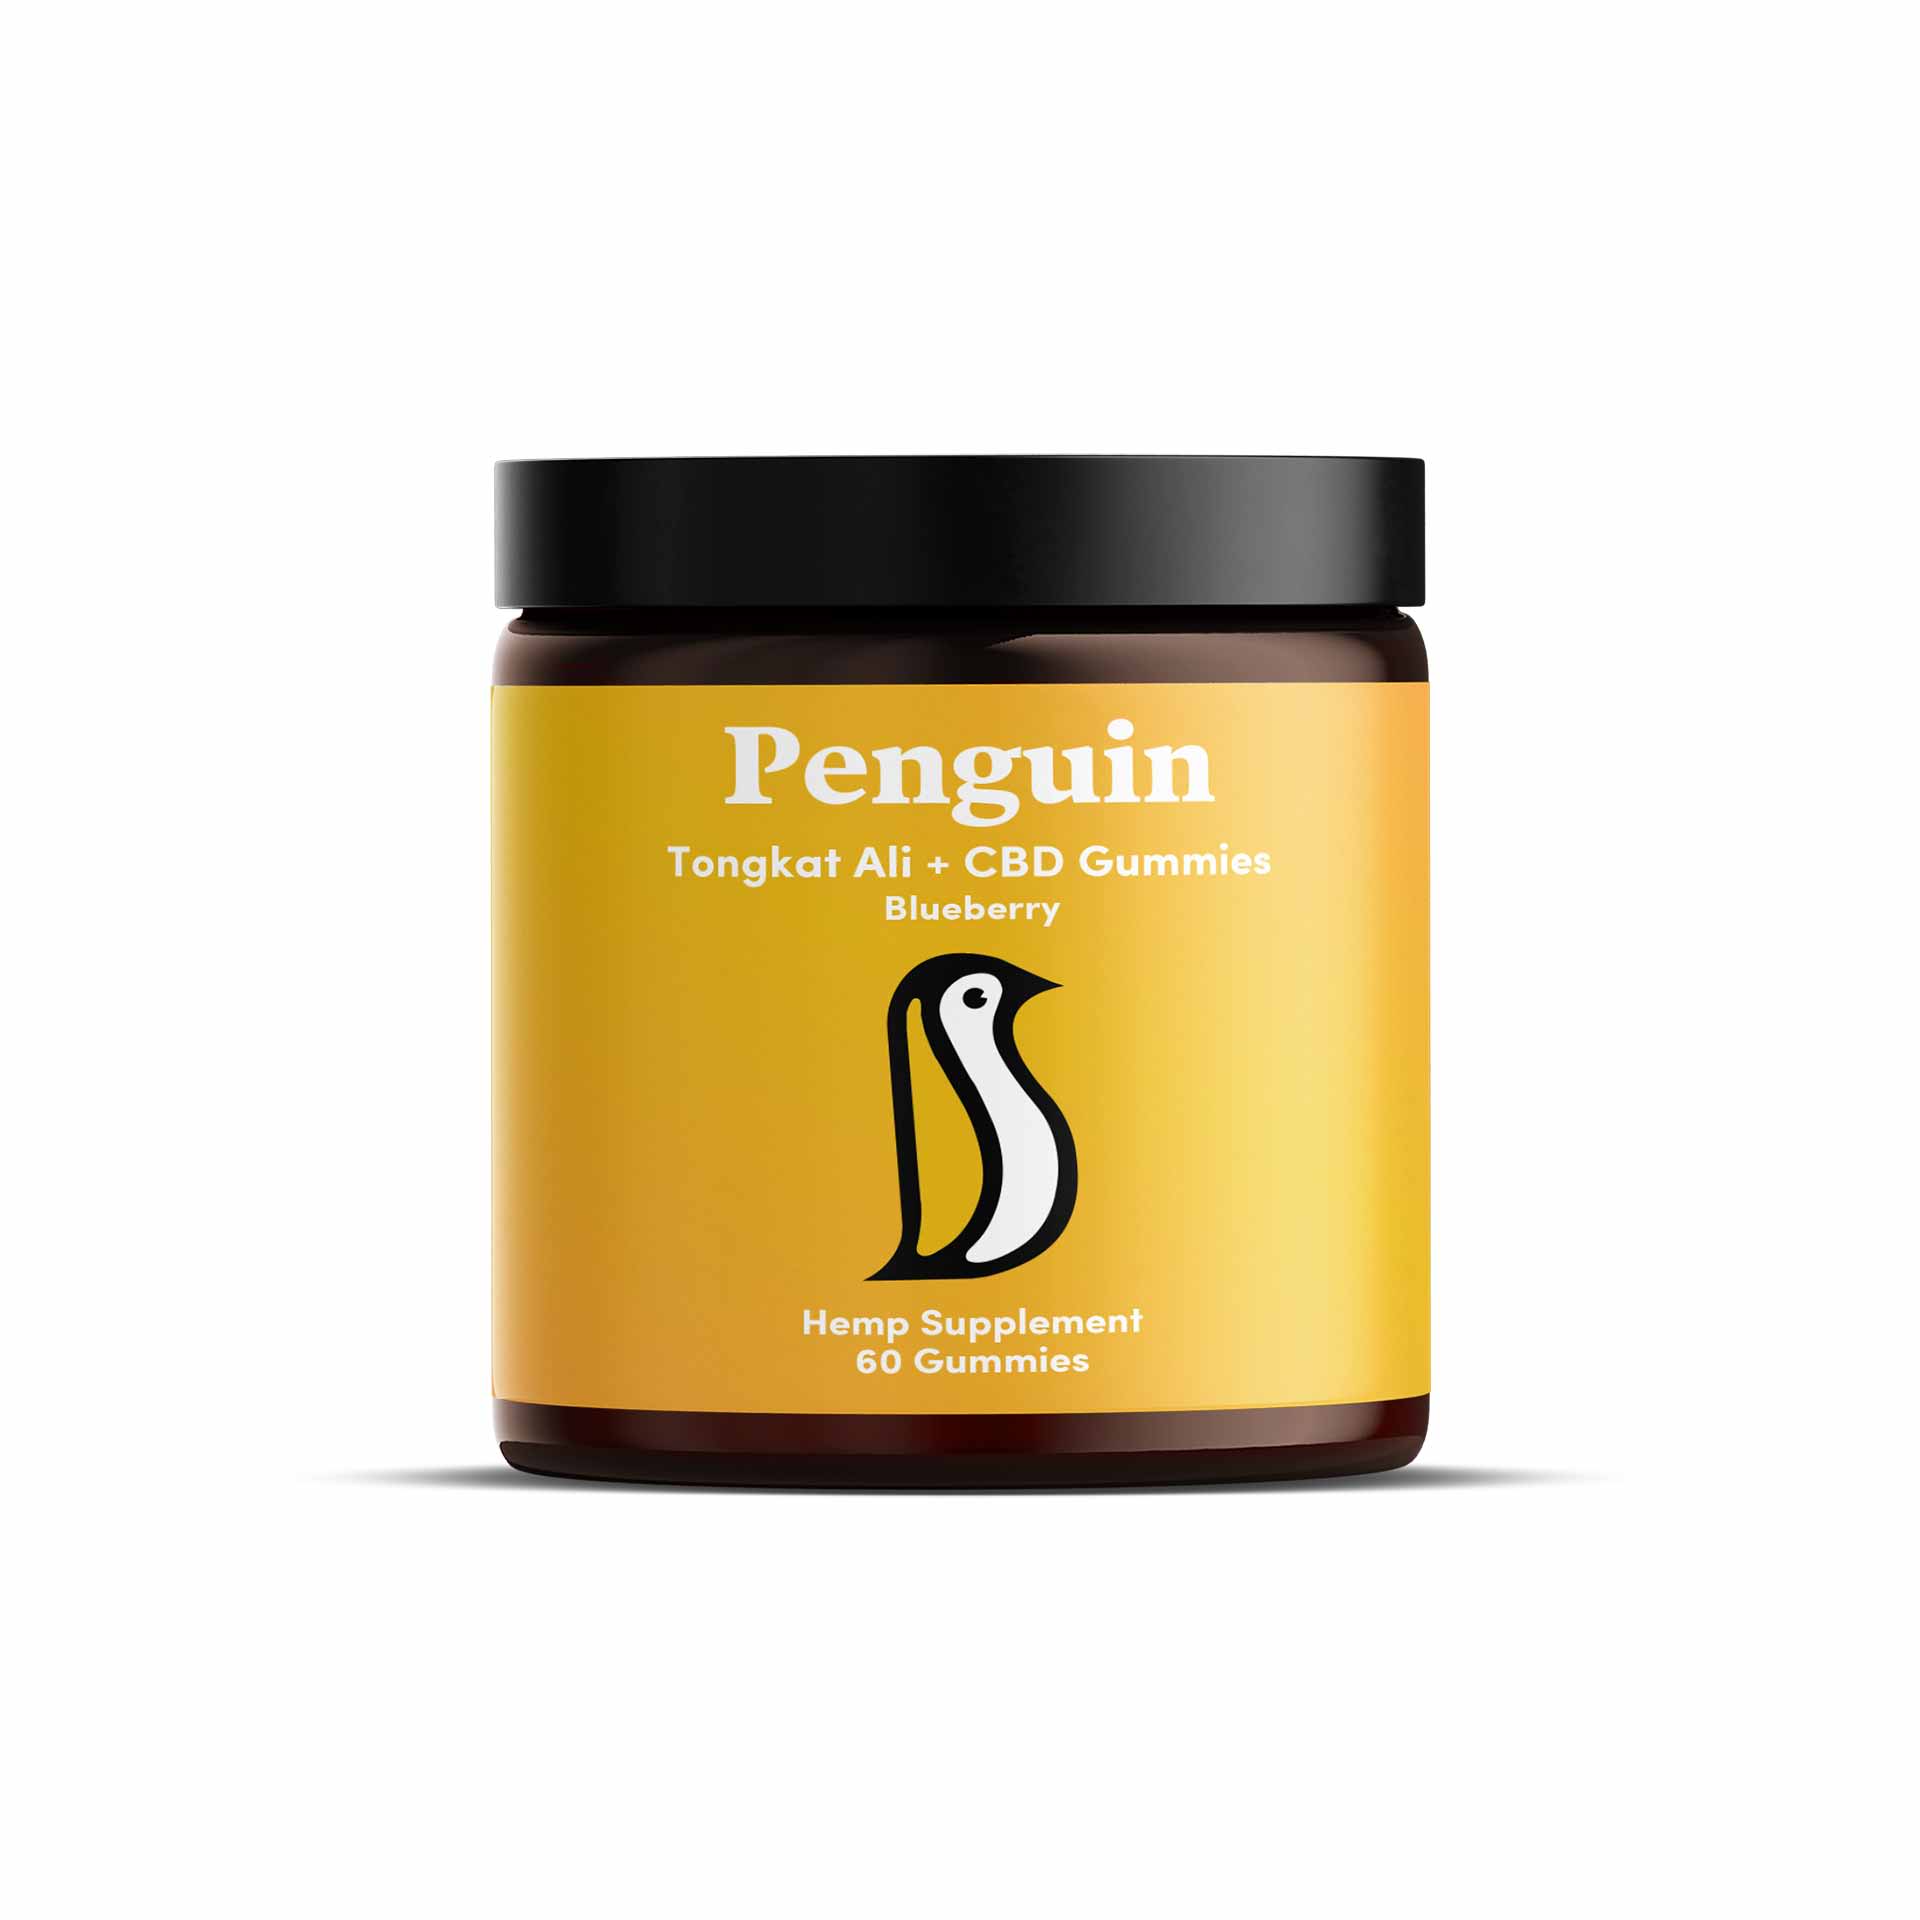 Penguin CBD Testosterone Support